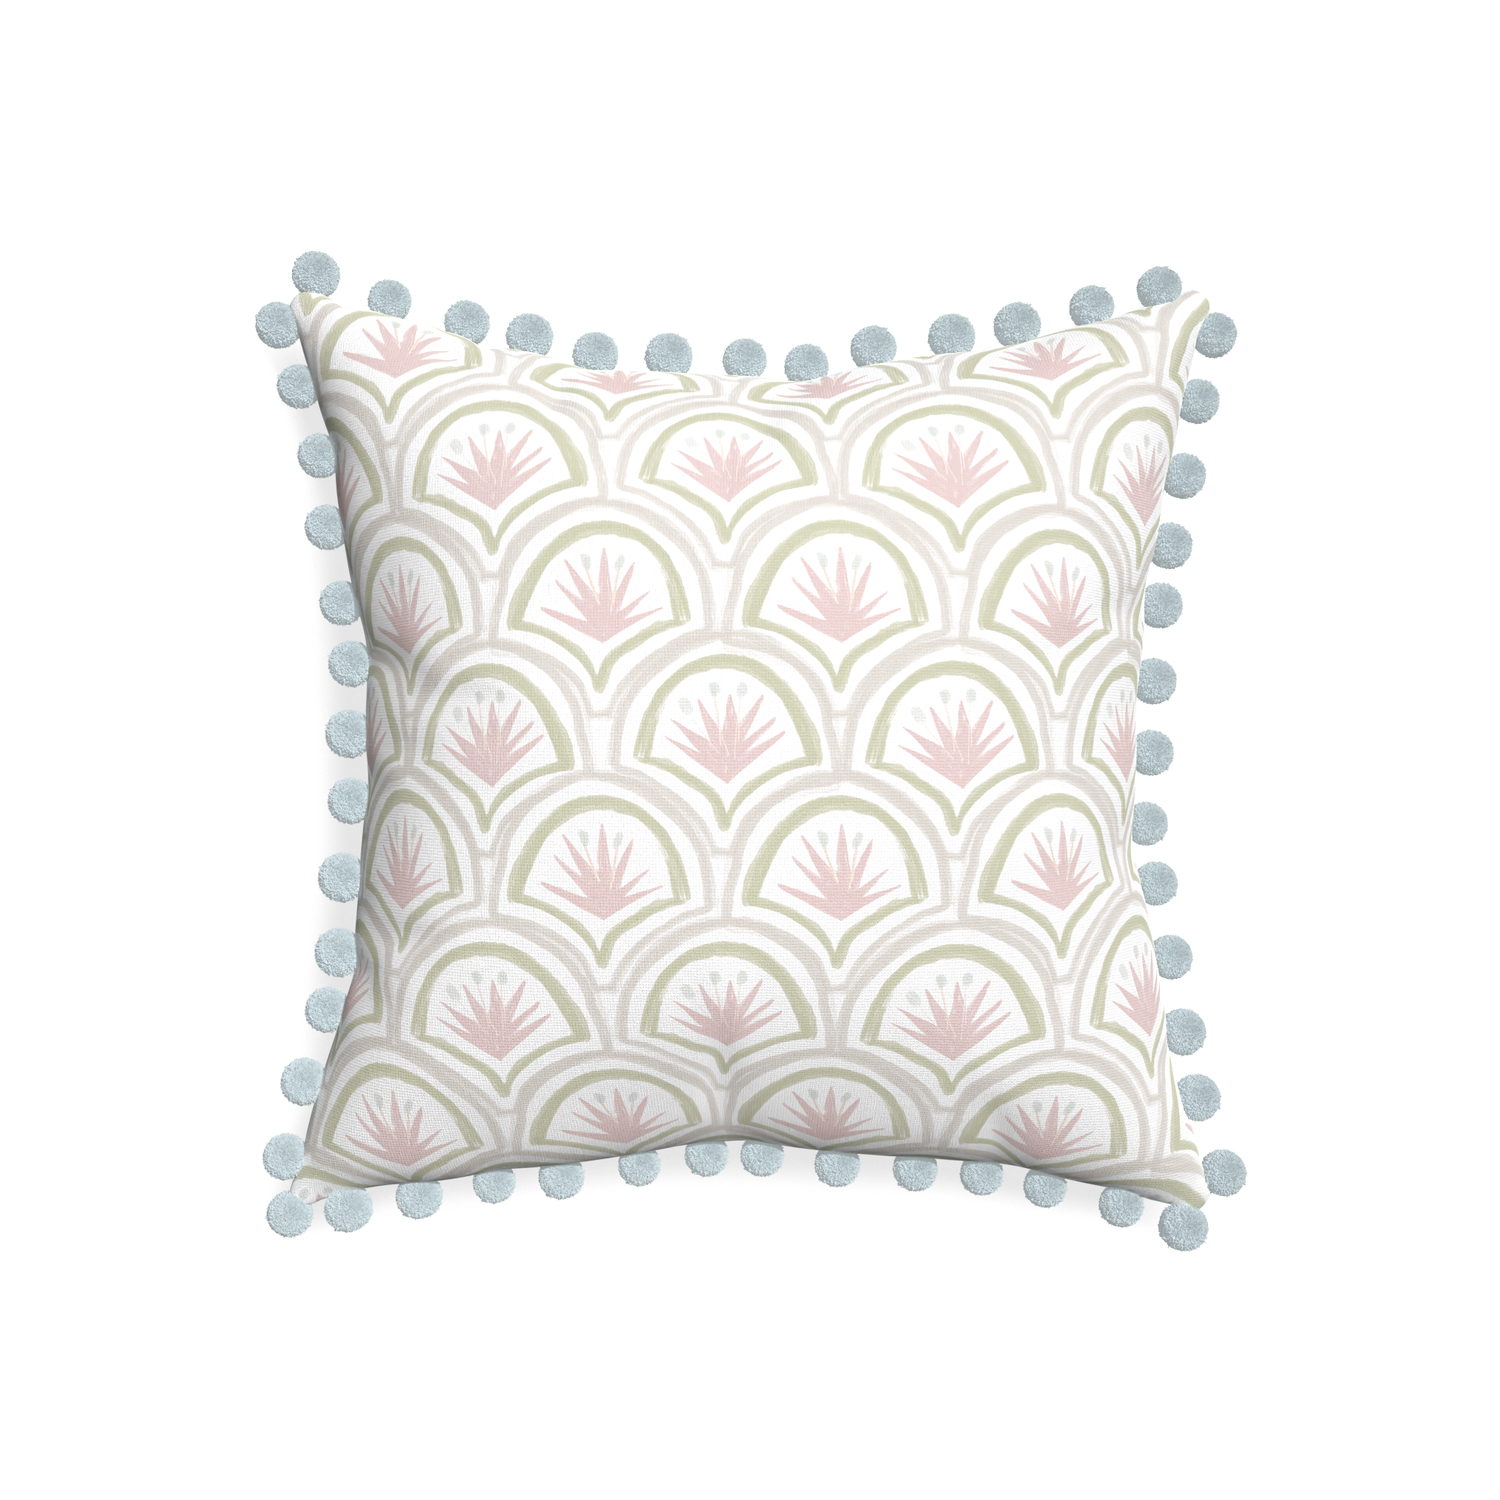 20-square thatcher rose custom pillow with powder pom pom on white background